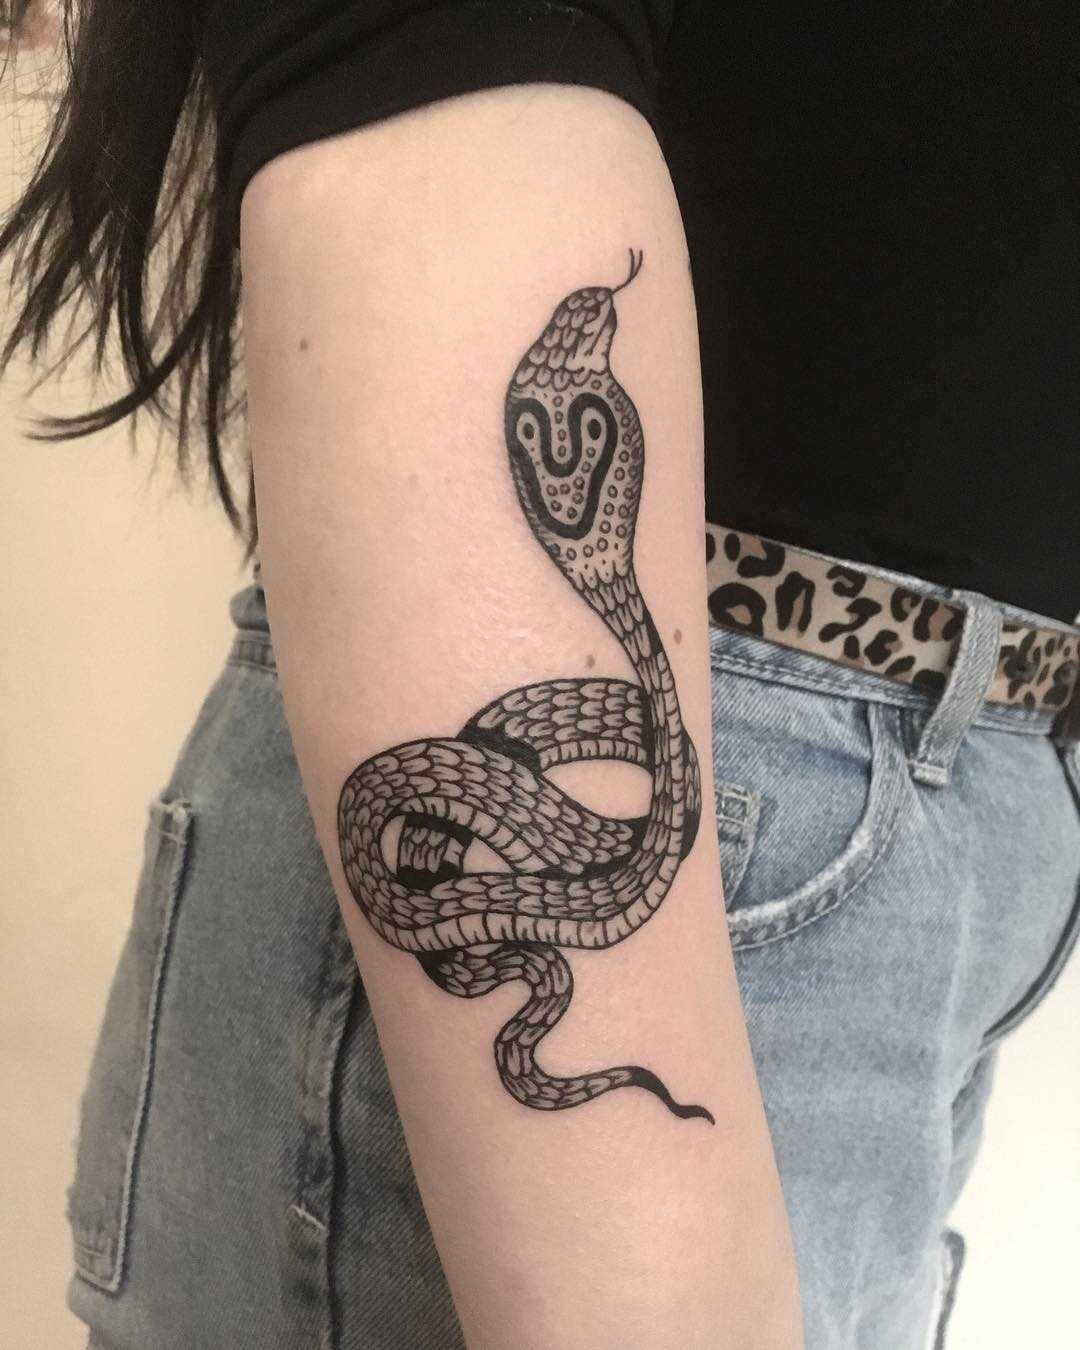 Cobra tattoo on the forearm